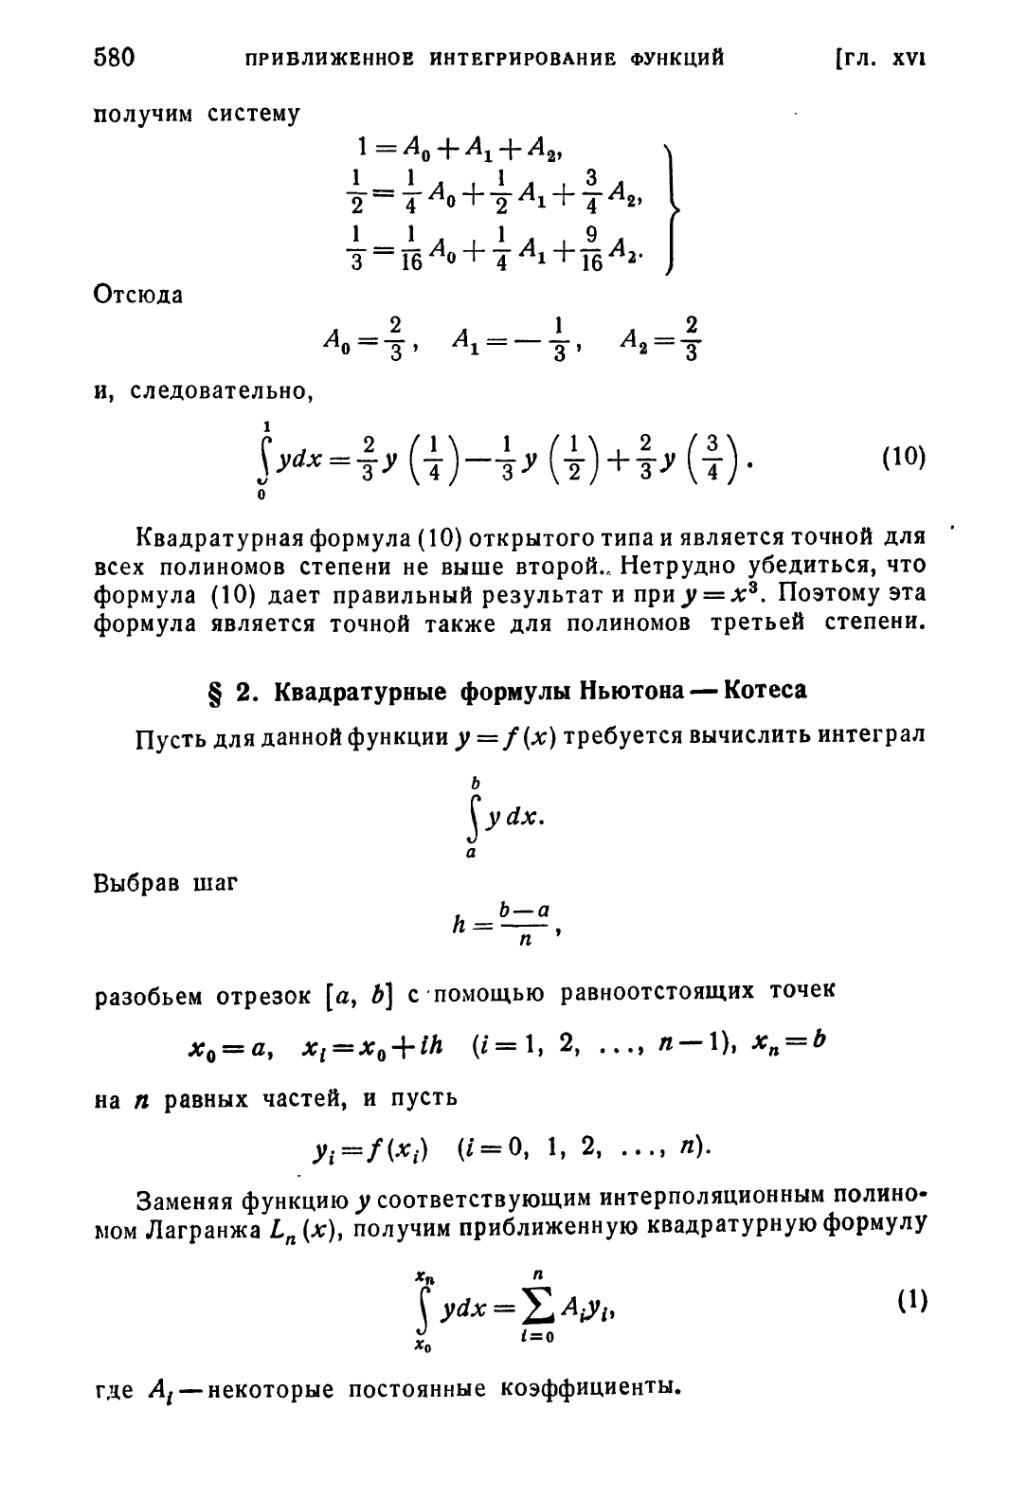 § 2. Квадратурные формулы Ньютона-Котеса